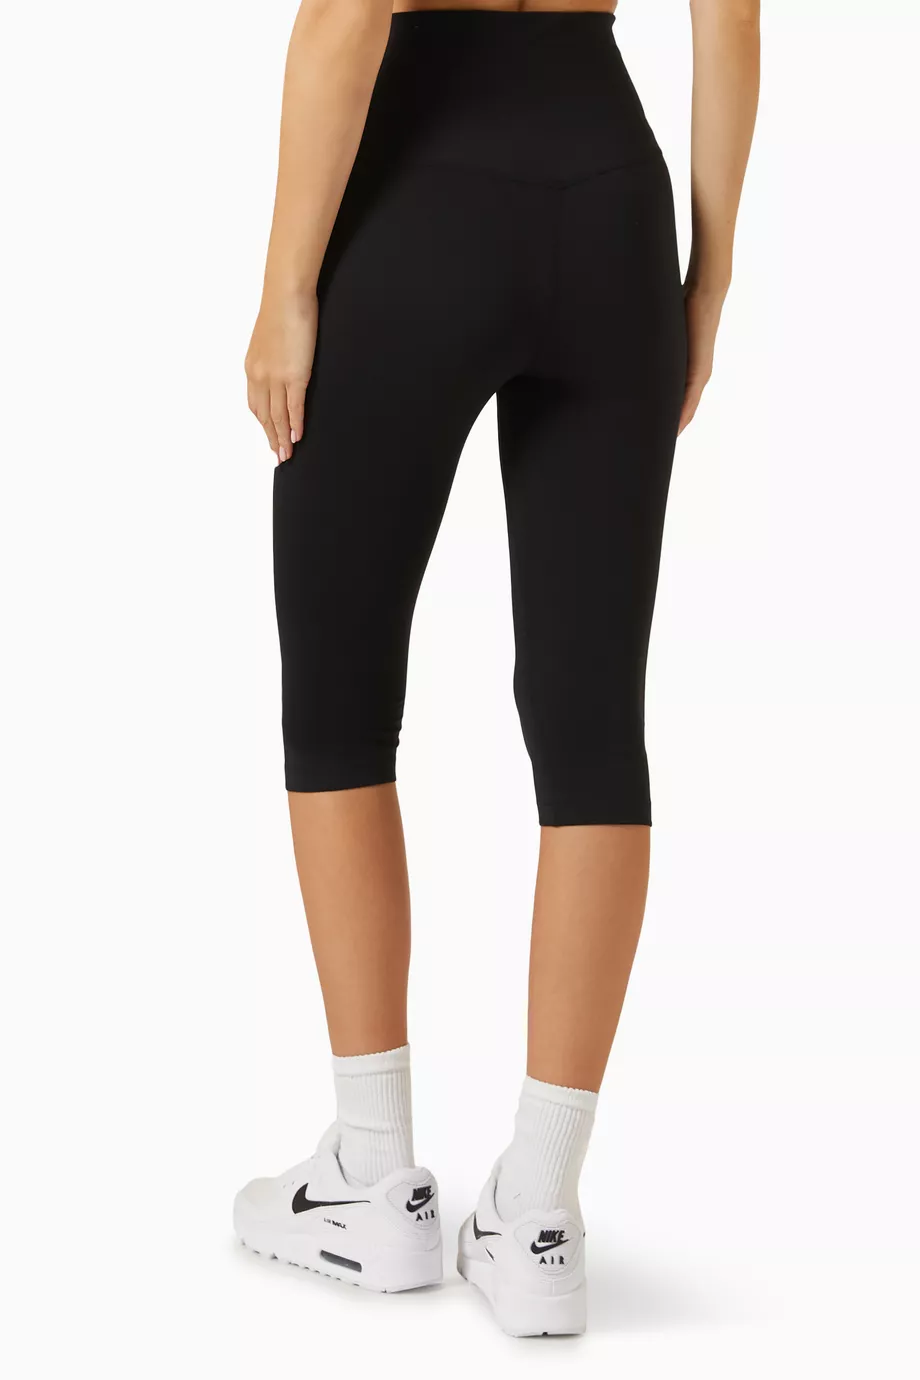 Buy Nike Black One Capri Leggings for Women in Kuwait